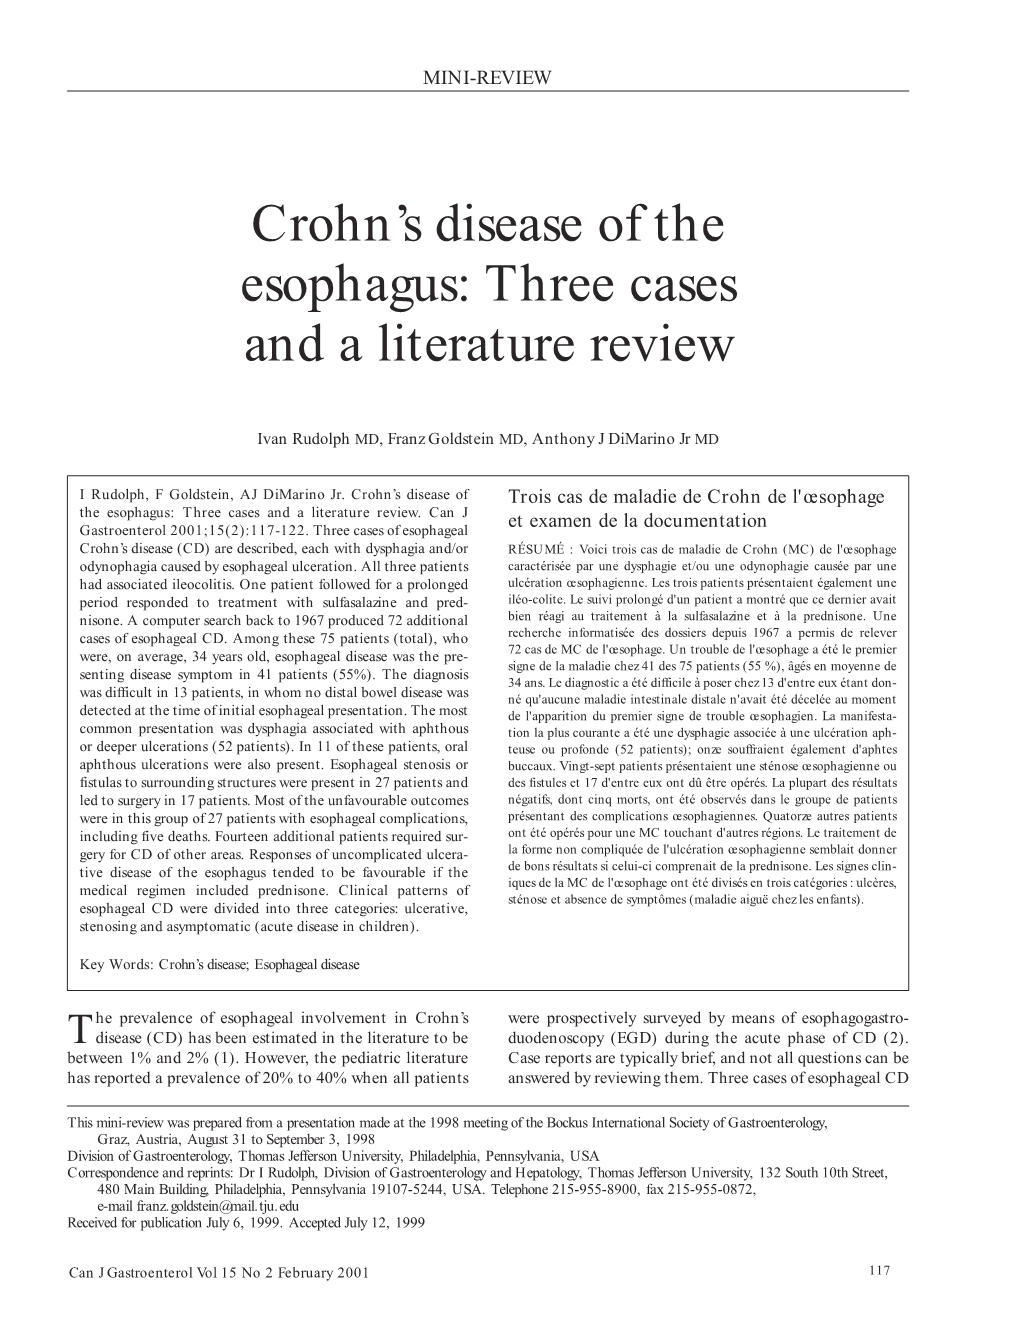 Crohn's Disease of the Esophagus